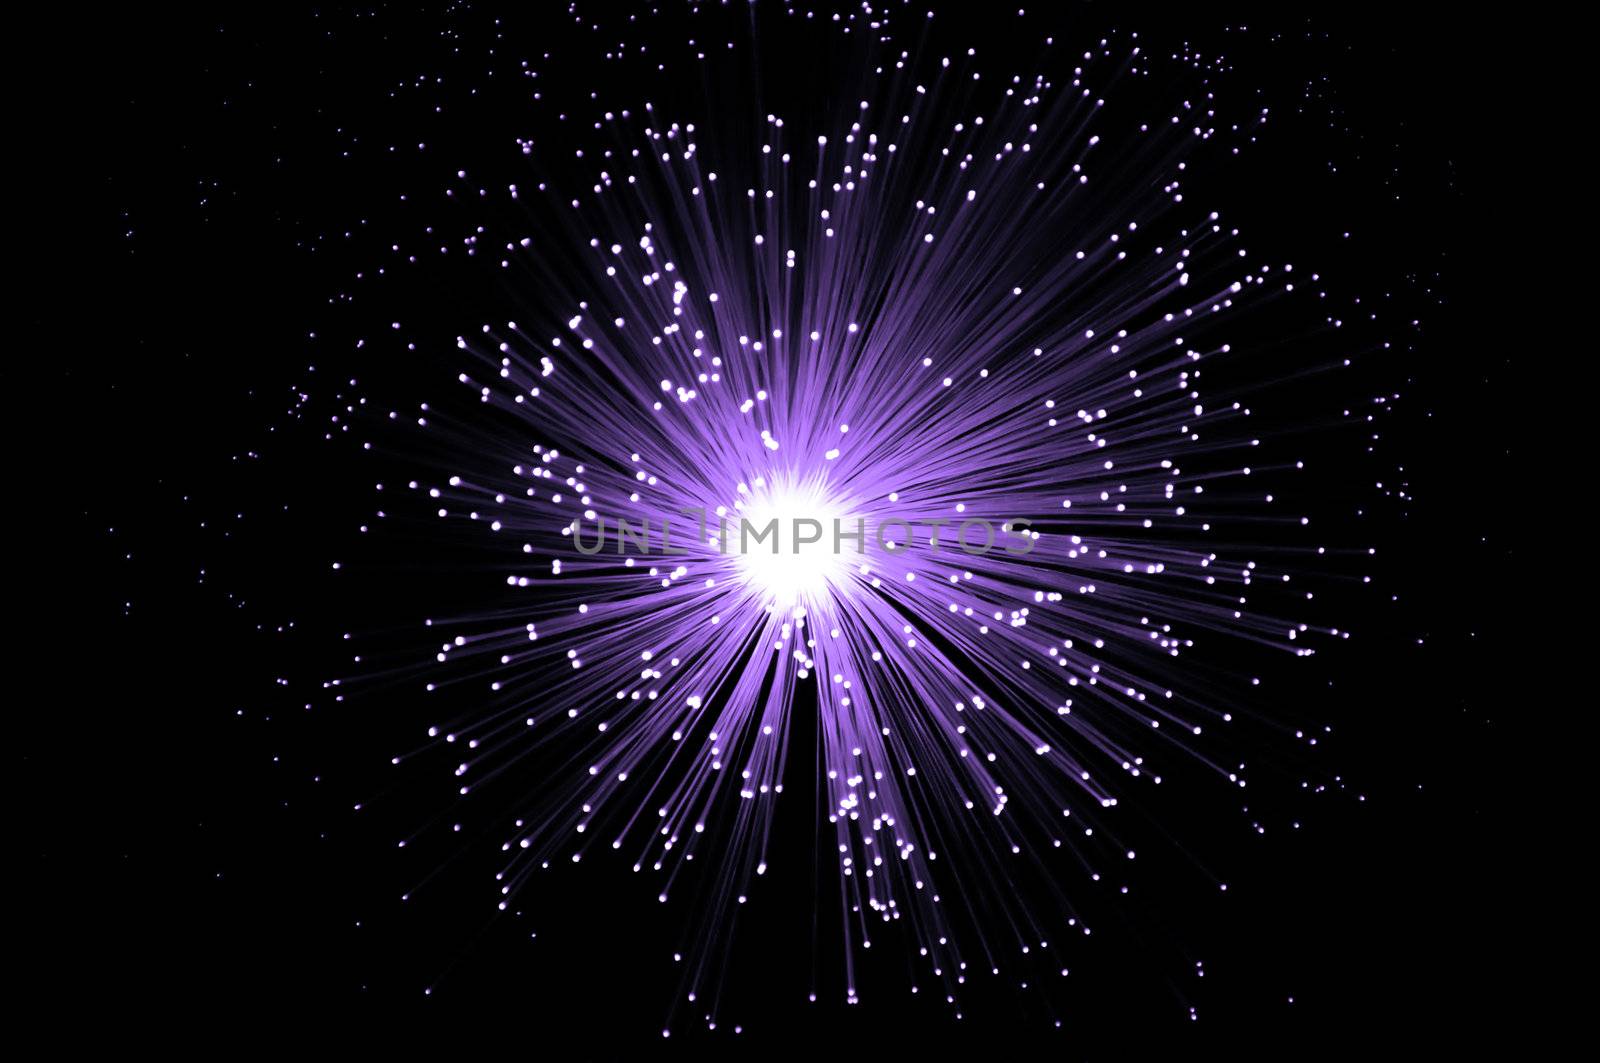 Overhead capturing many illuminated violet fiber optic light strands against black background